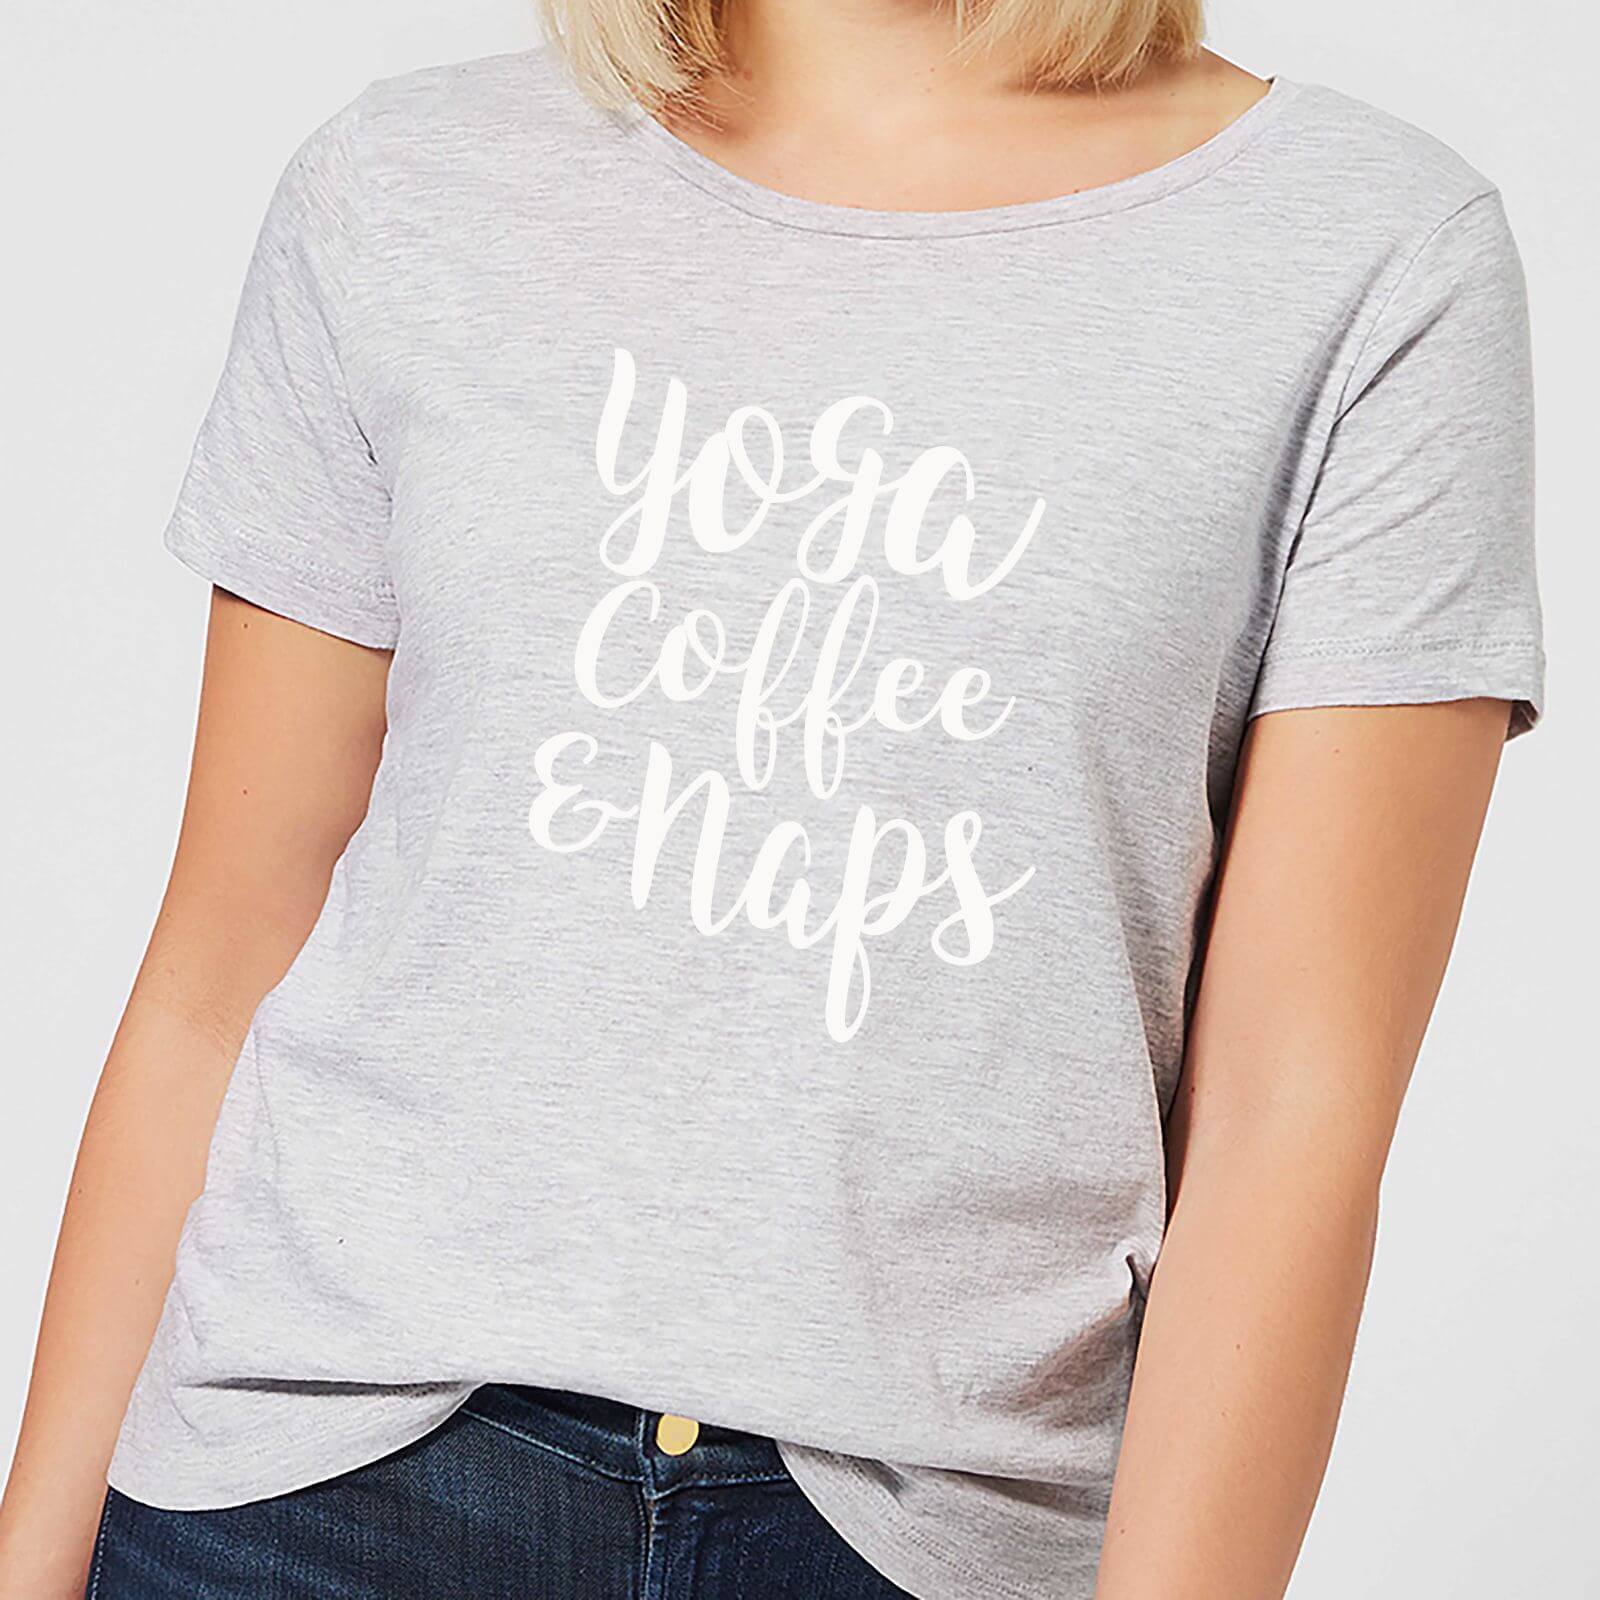 Yoga Coffee and Naps Women's T-Shirt - Grey - M - Grey